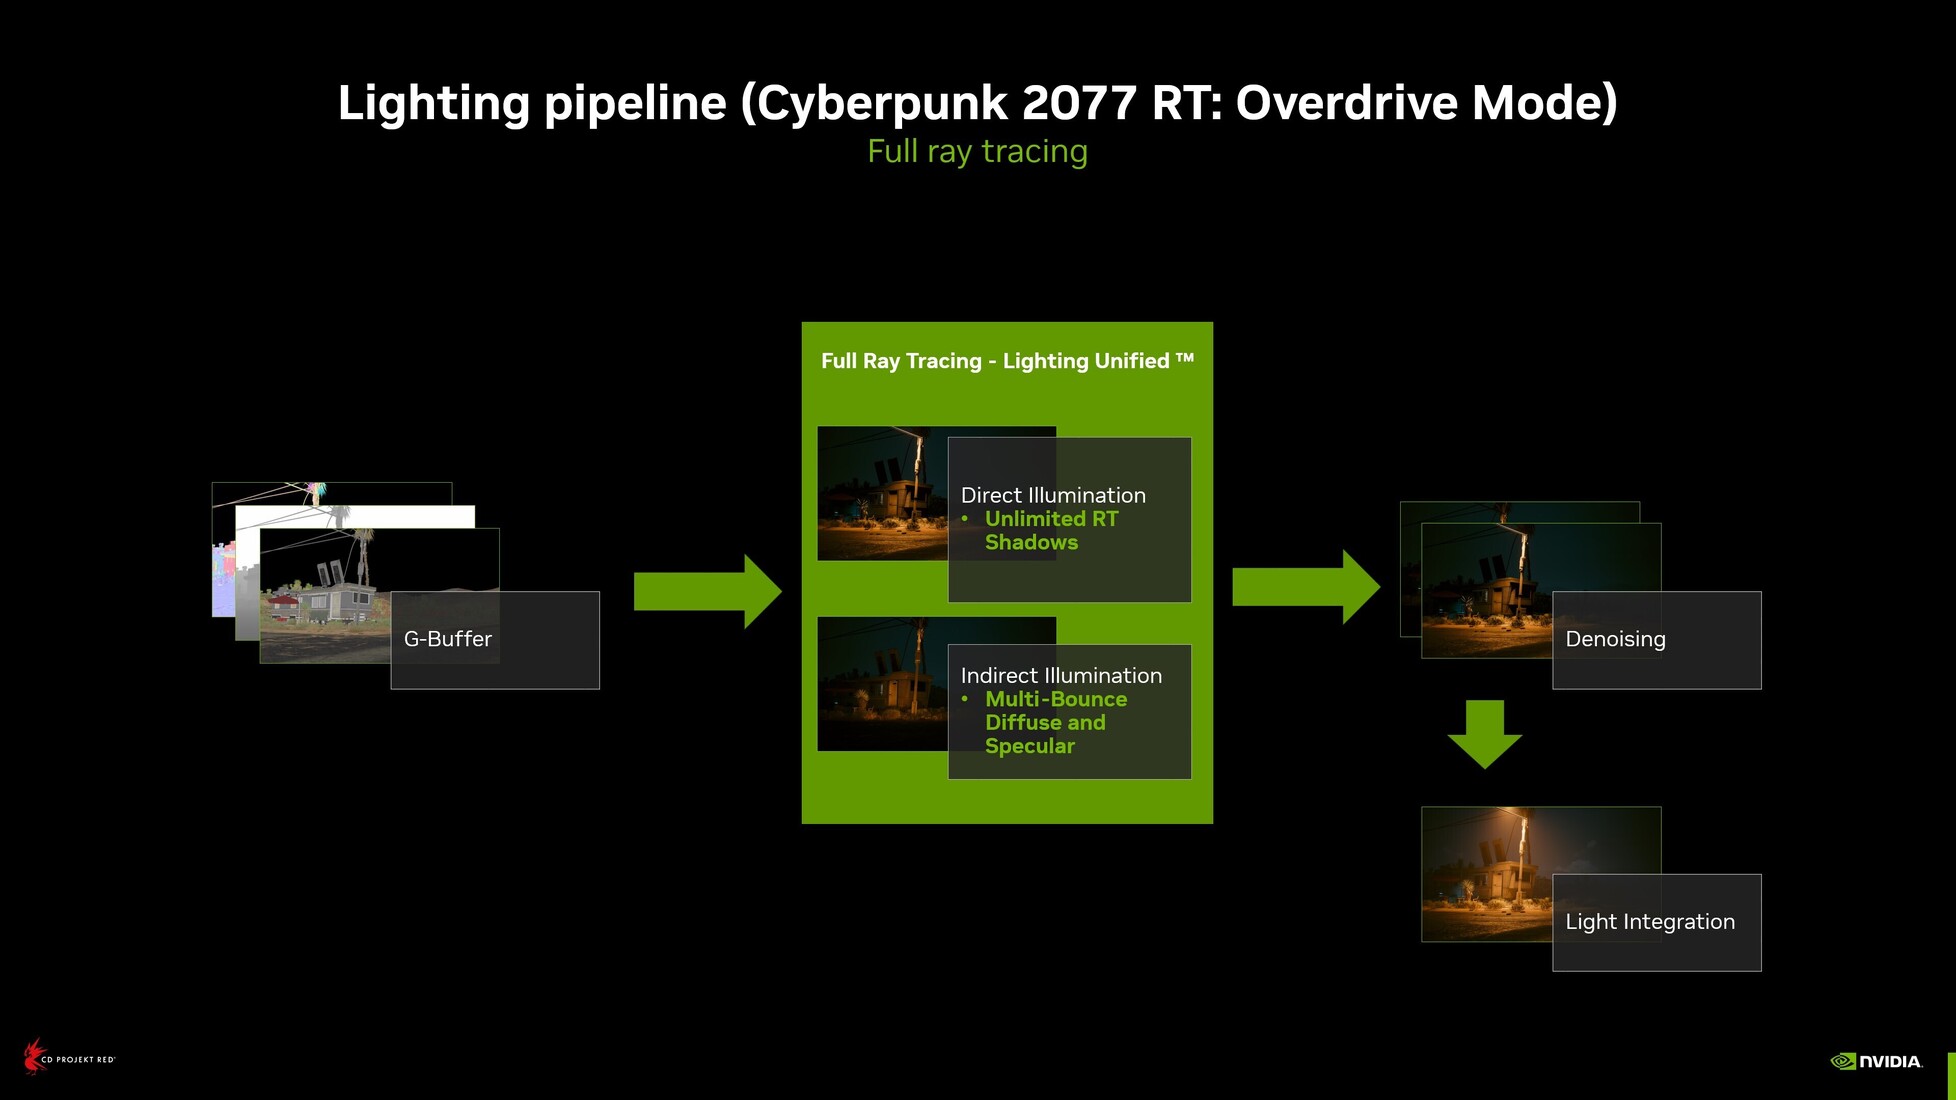 Cyberpunk 2077  Ray Tracing: Overdrive Mode - 4K Technology